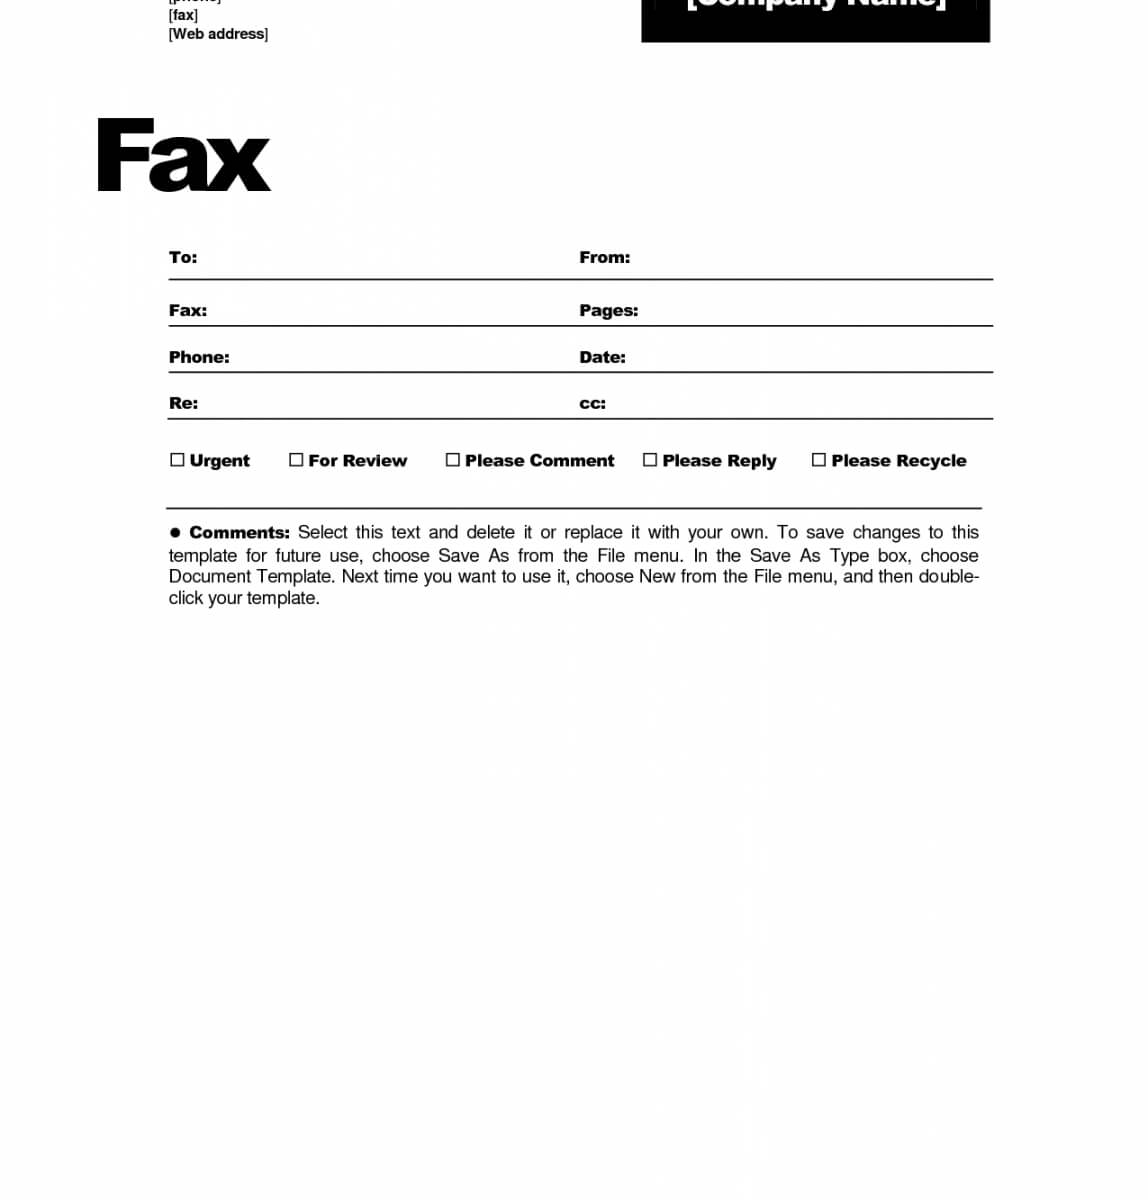 037 Fax Cover Sheet Template Word Ideas Editable How To Make Throughout Fax Cover Sheet Template Word 2010